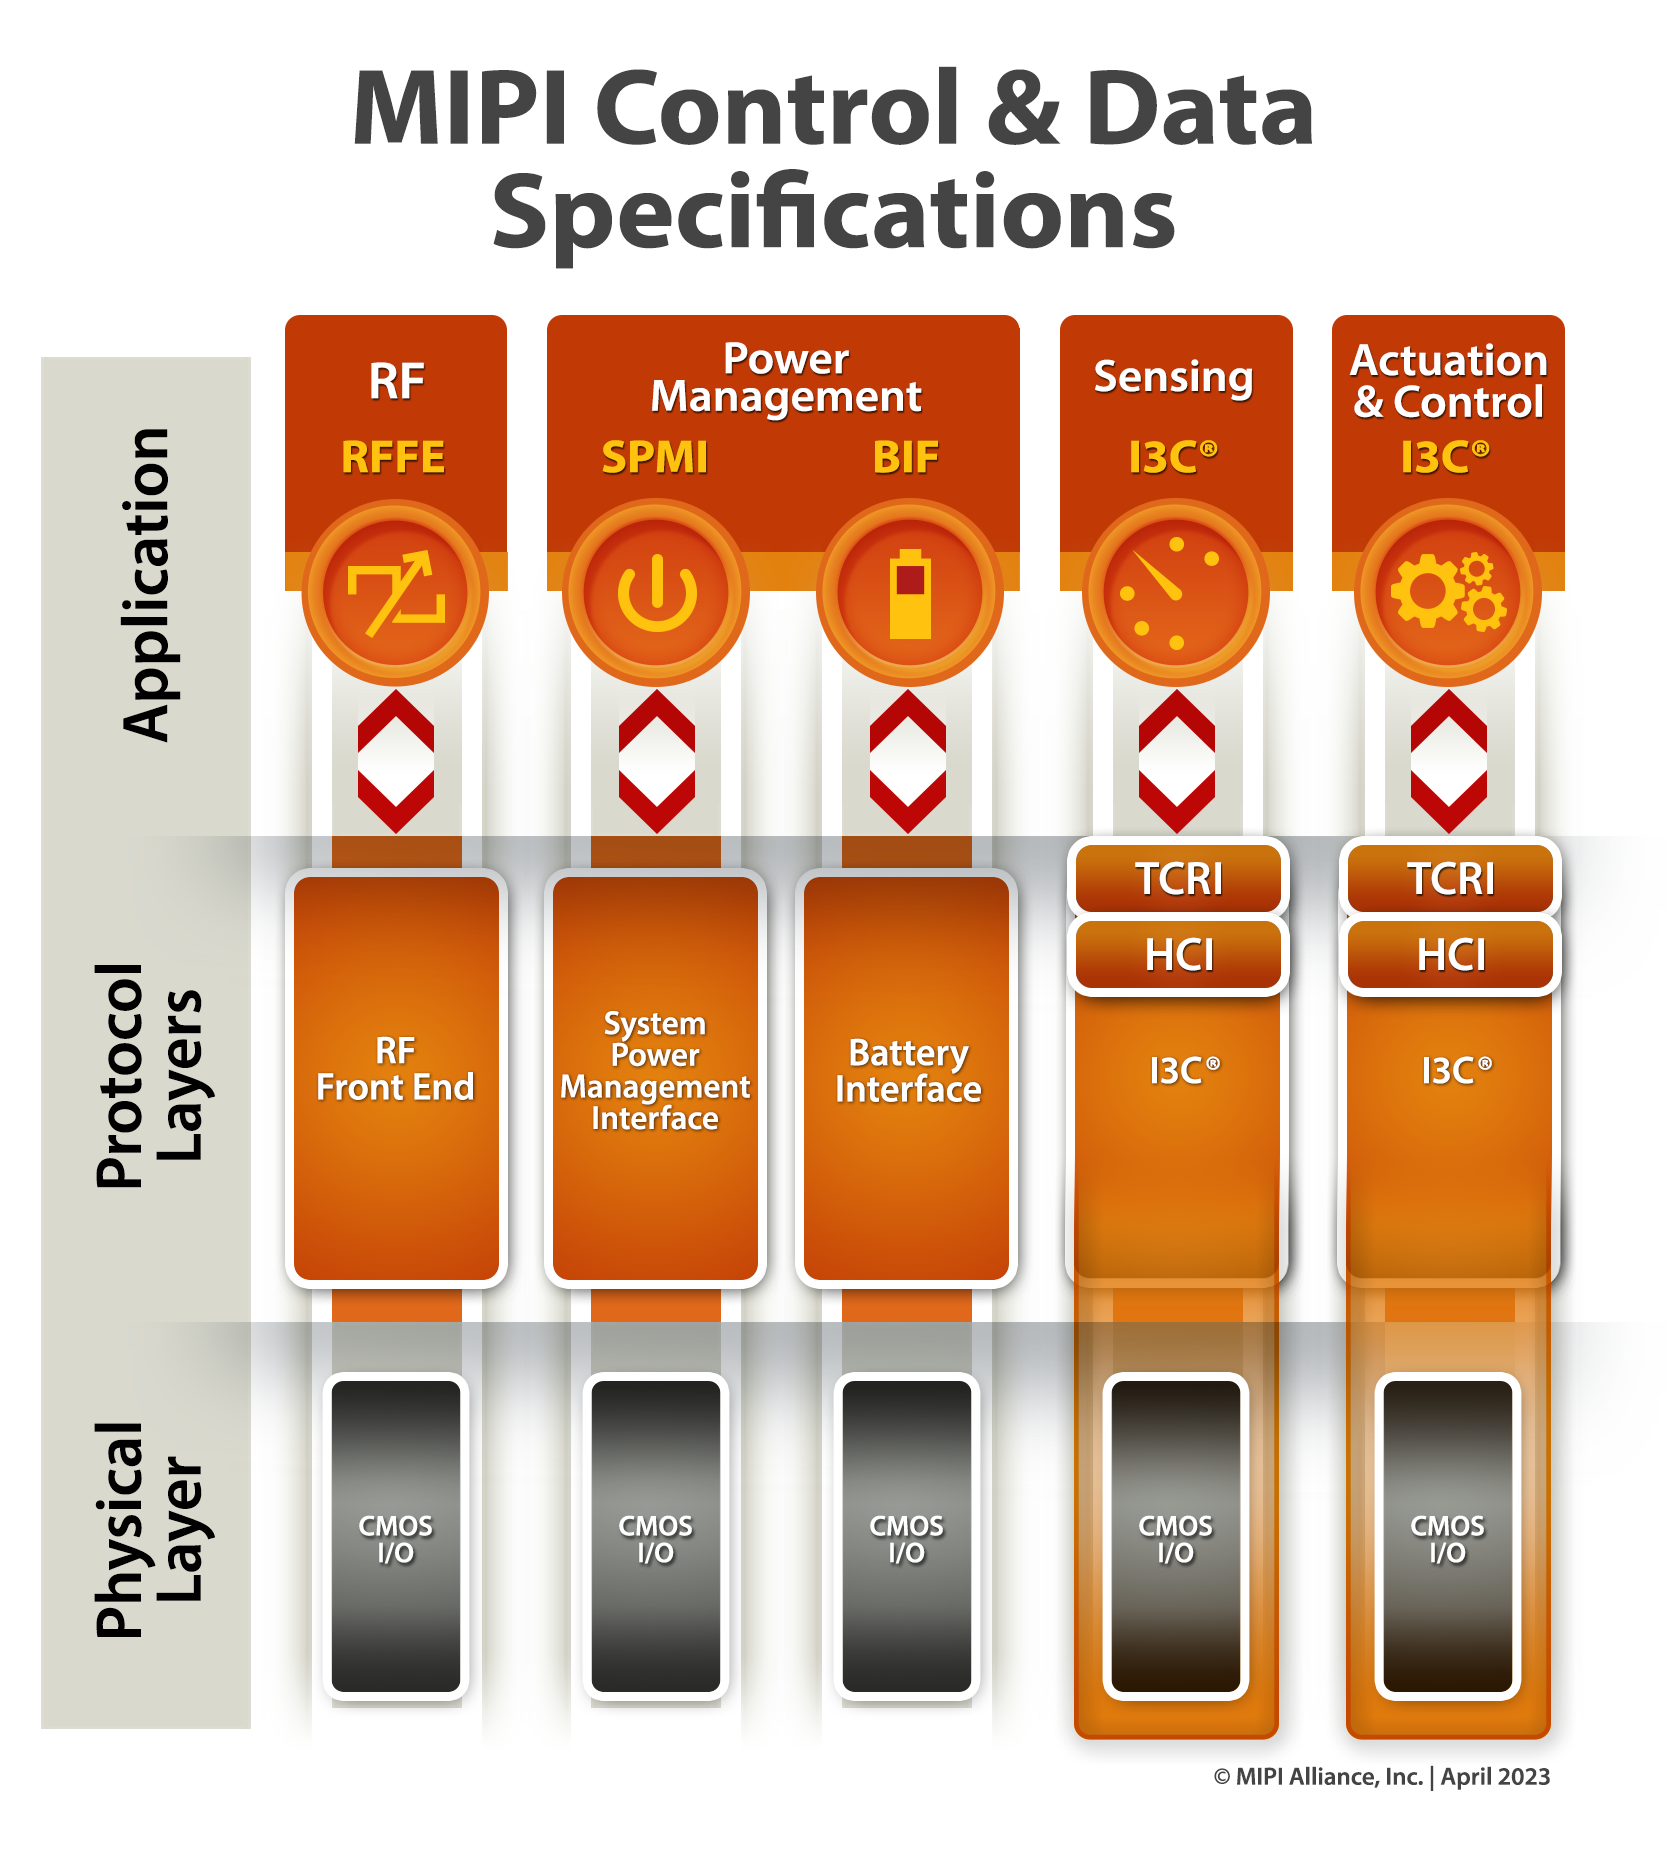 MIPI-Control-Data-Specification-Diagram-APR2023